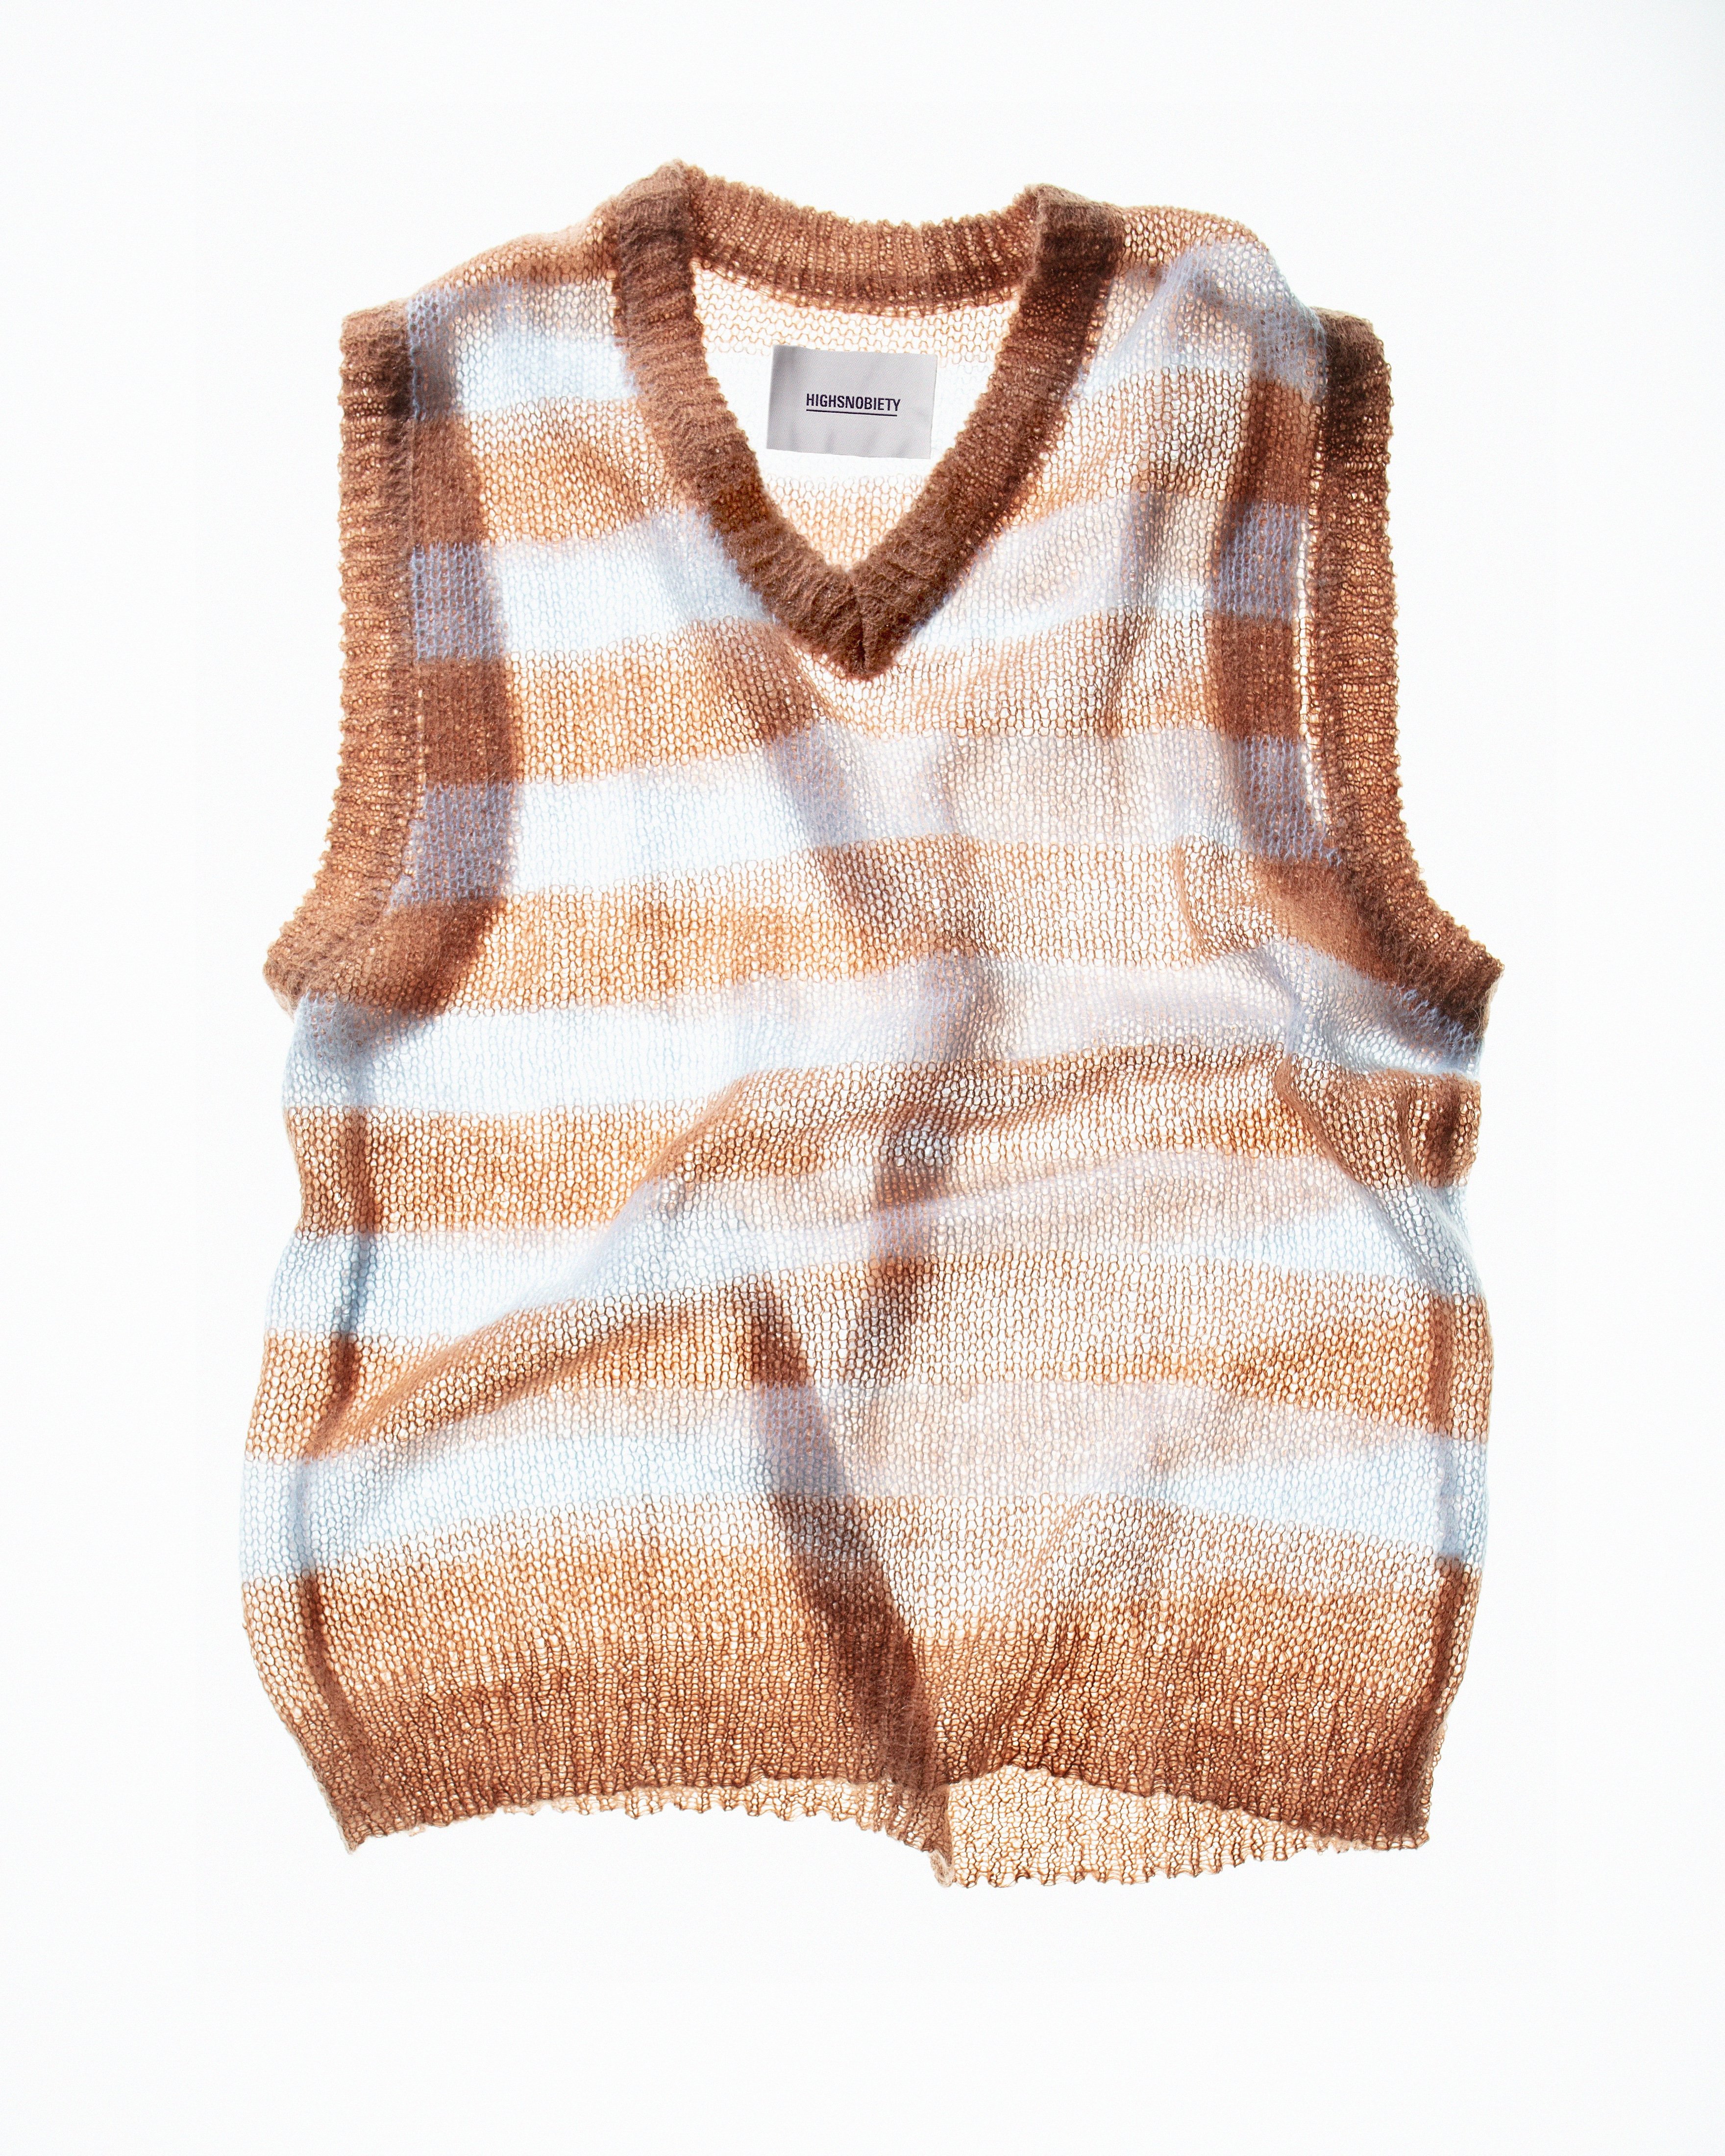 Highsnobiety - Sweater Vest Brown/Light Blue - Clothing - Multi - Image 9